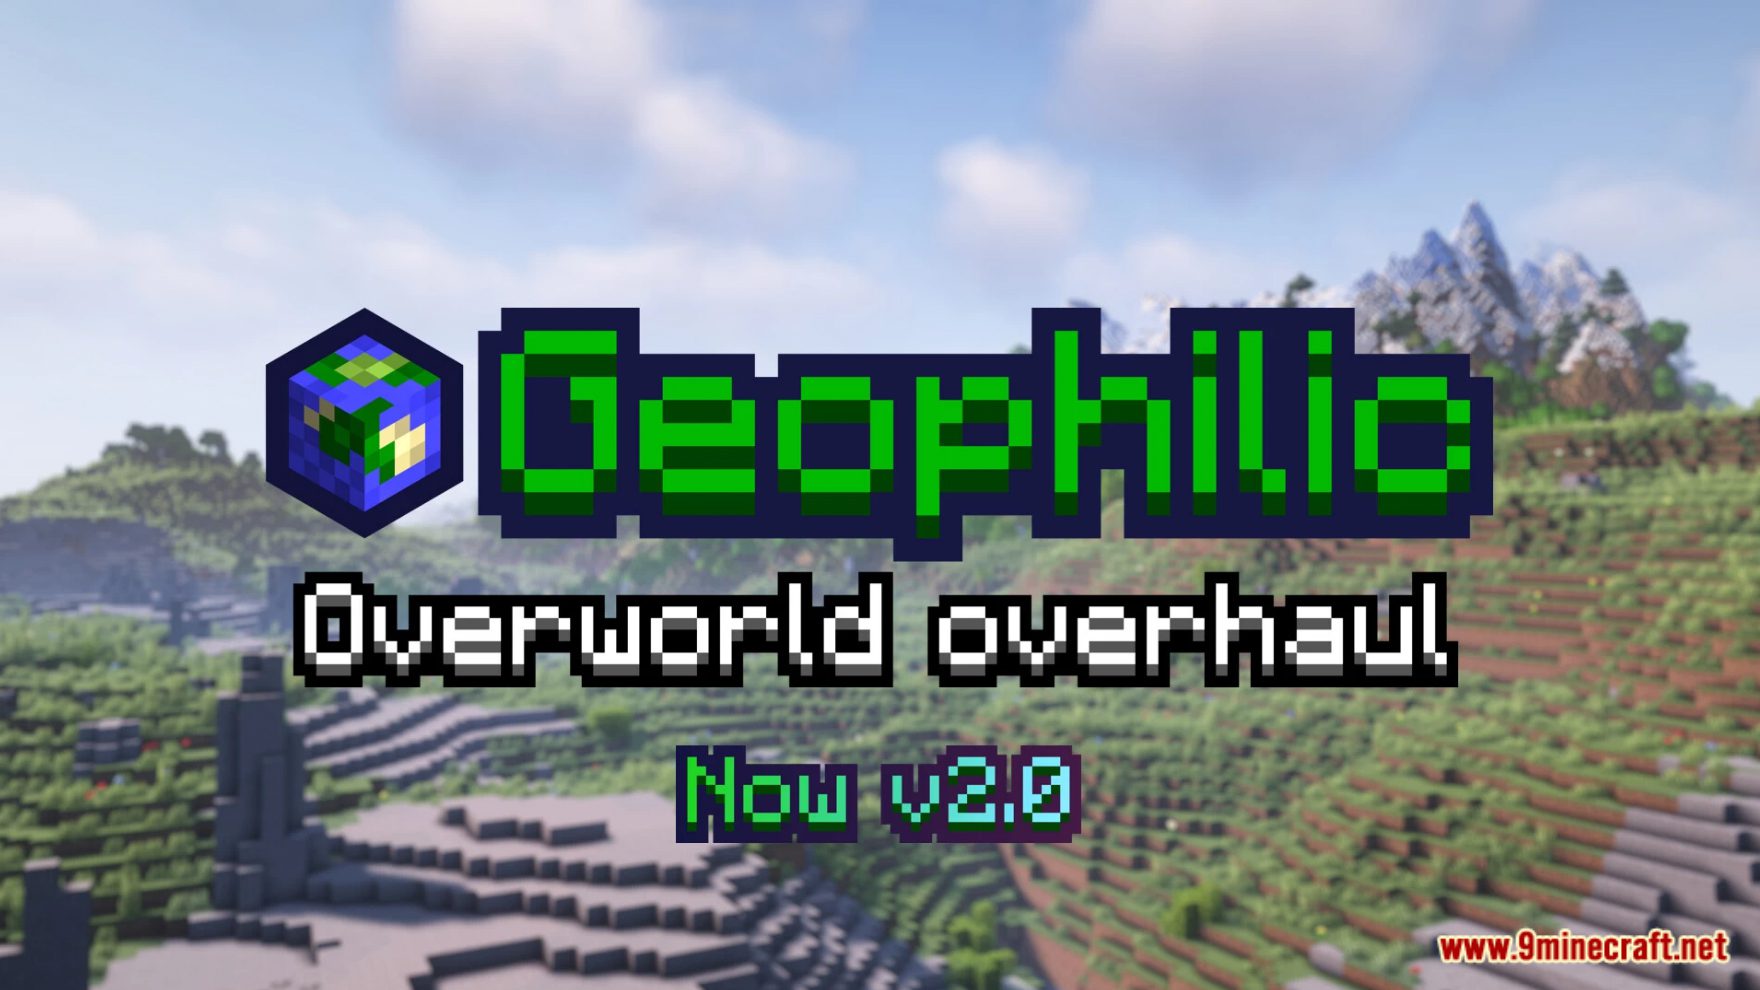 Geophilic Data Pack (1.19.4, 1.19.2) - Overworld Overhaul! 2